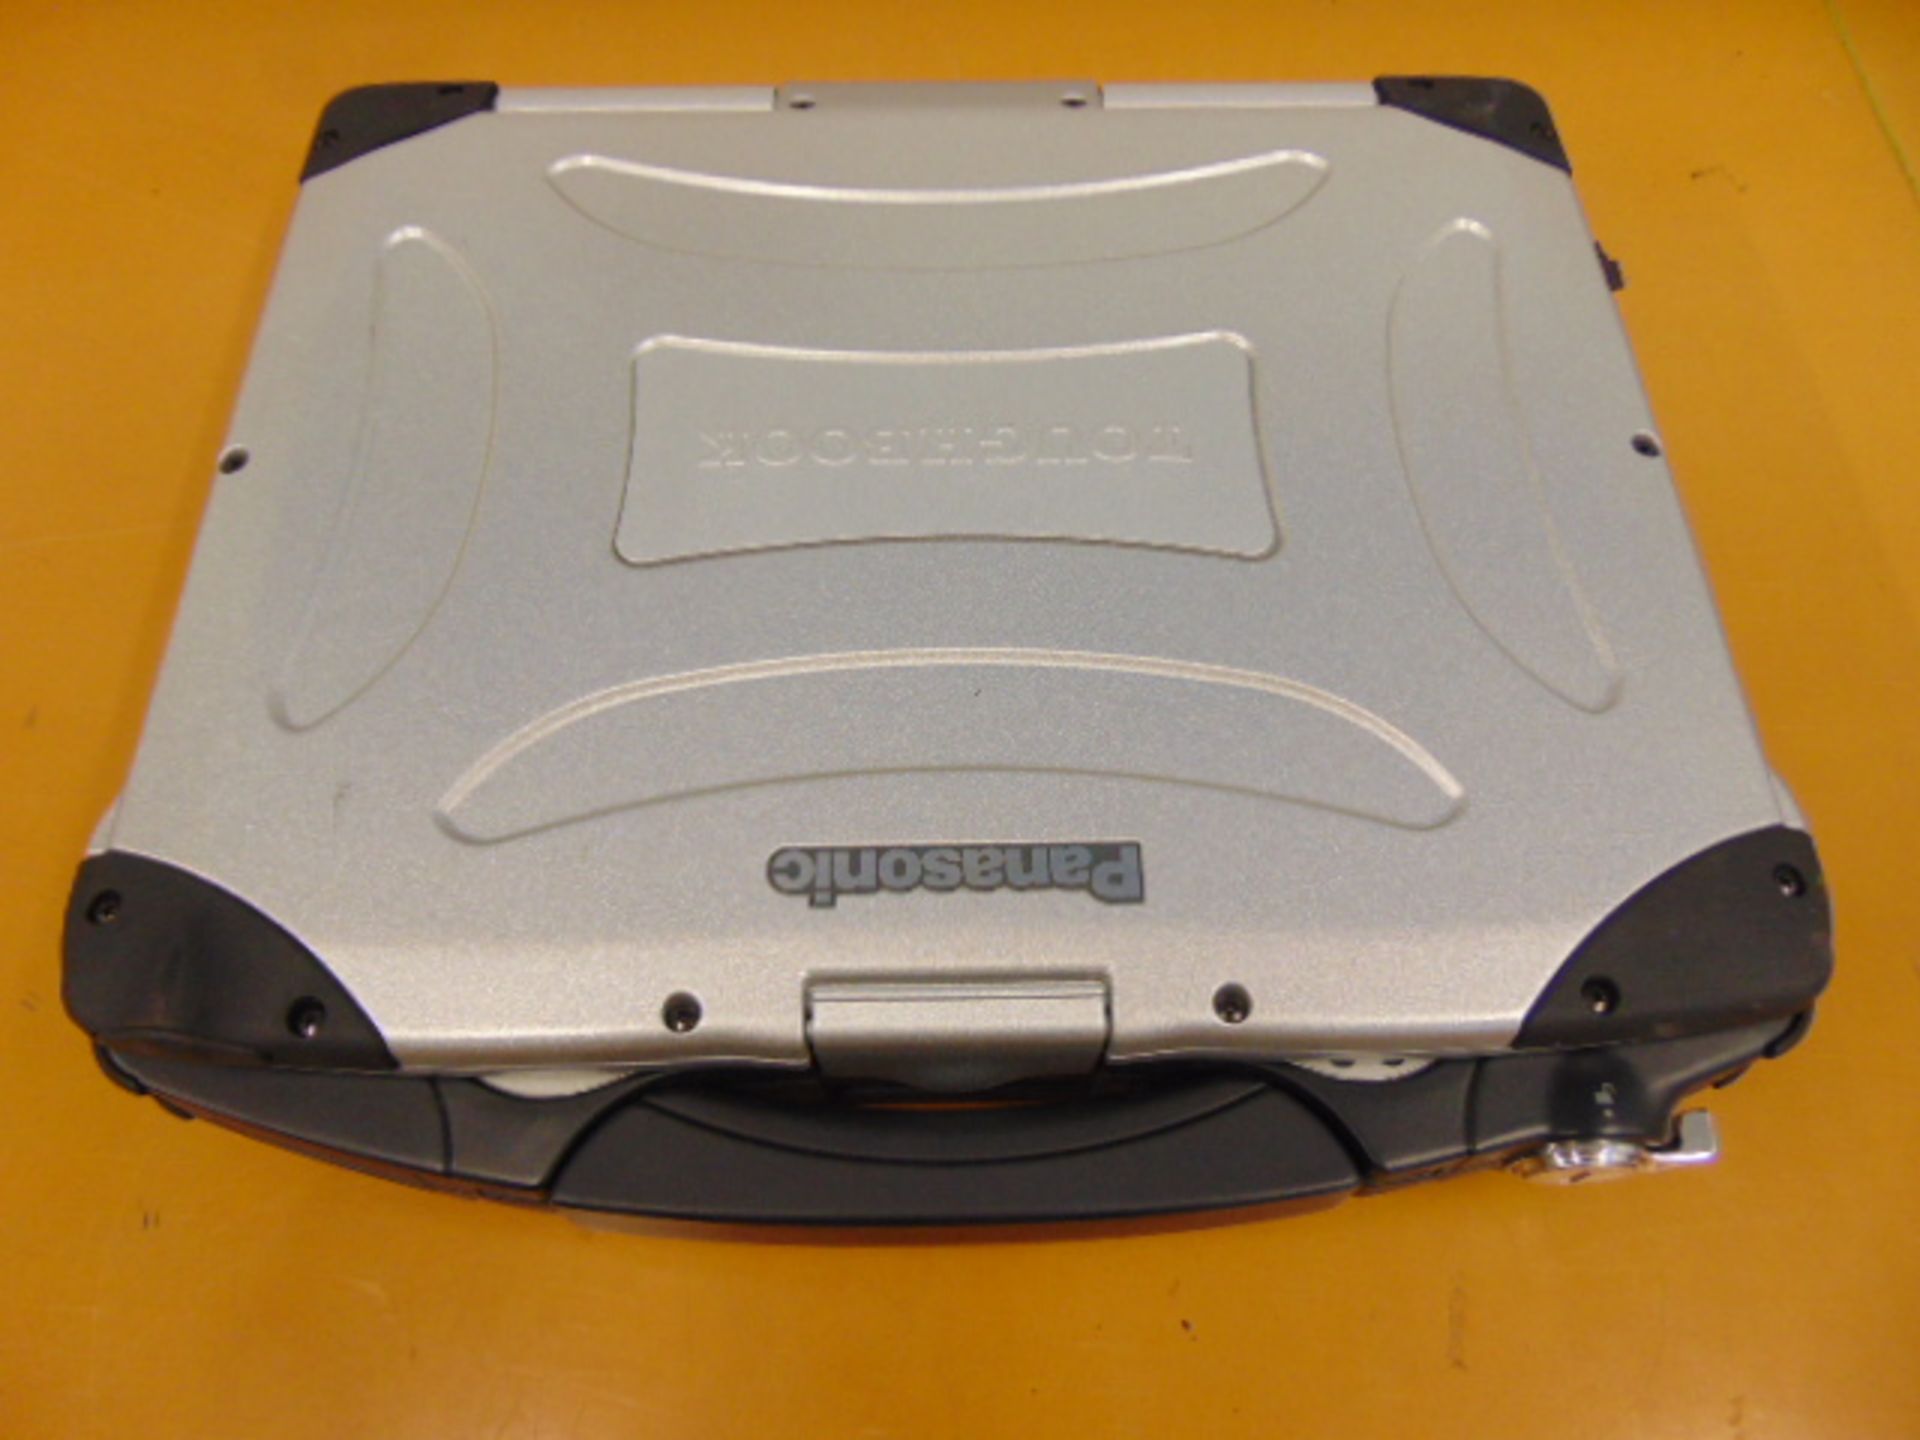 Panasonic CF-28 Toughbook Laptop - Image 4 of 11